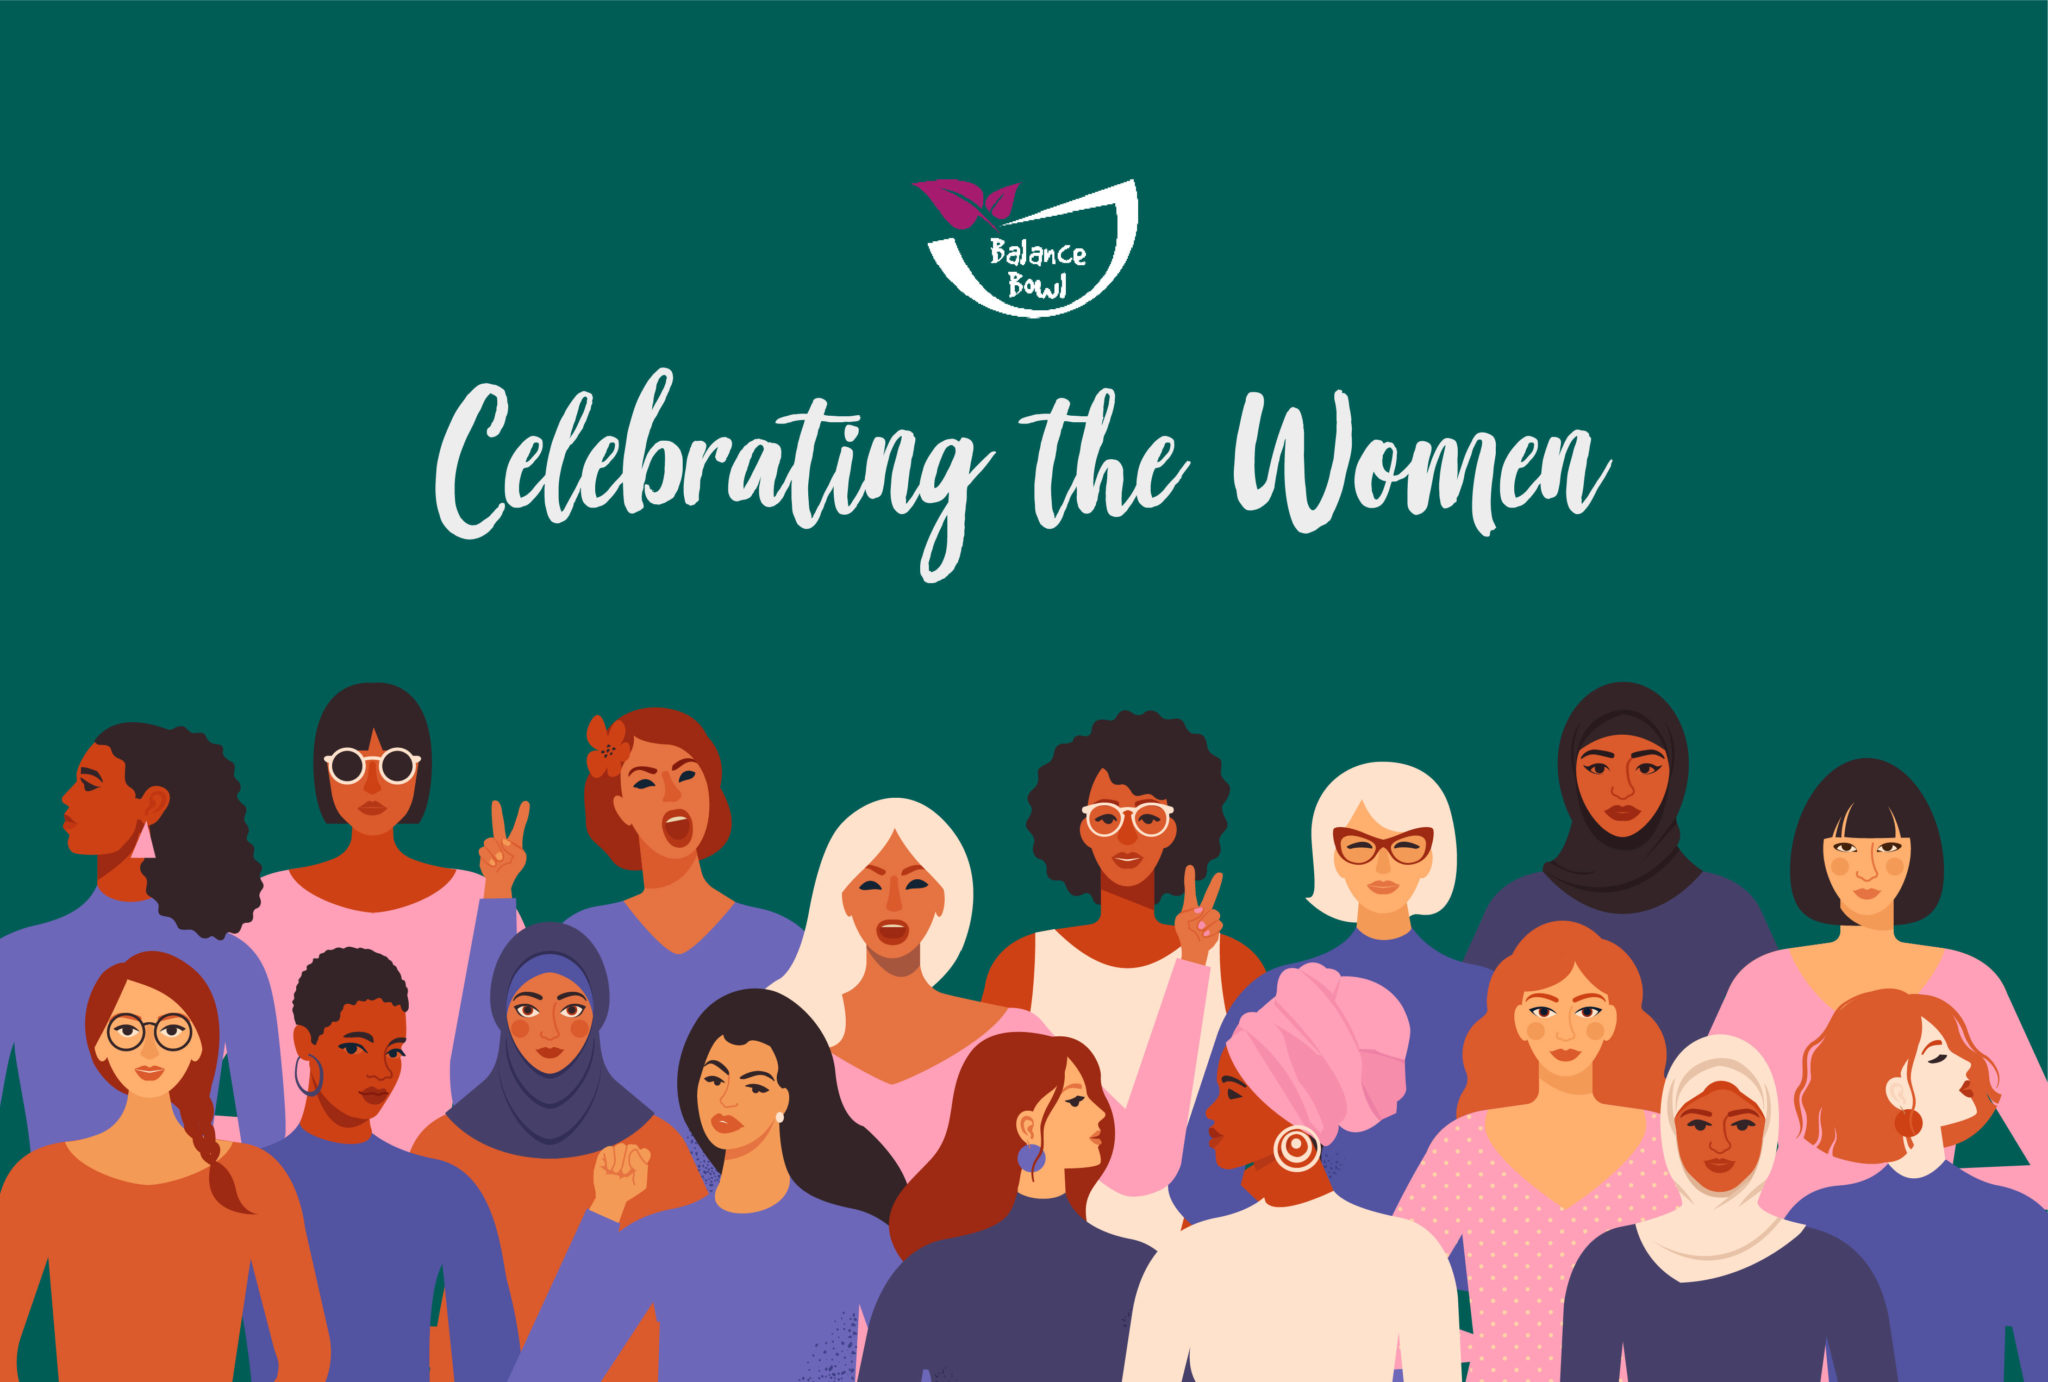 Celebrating Women